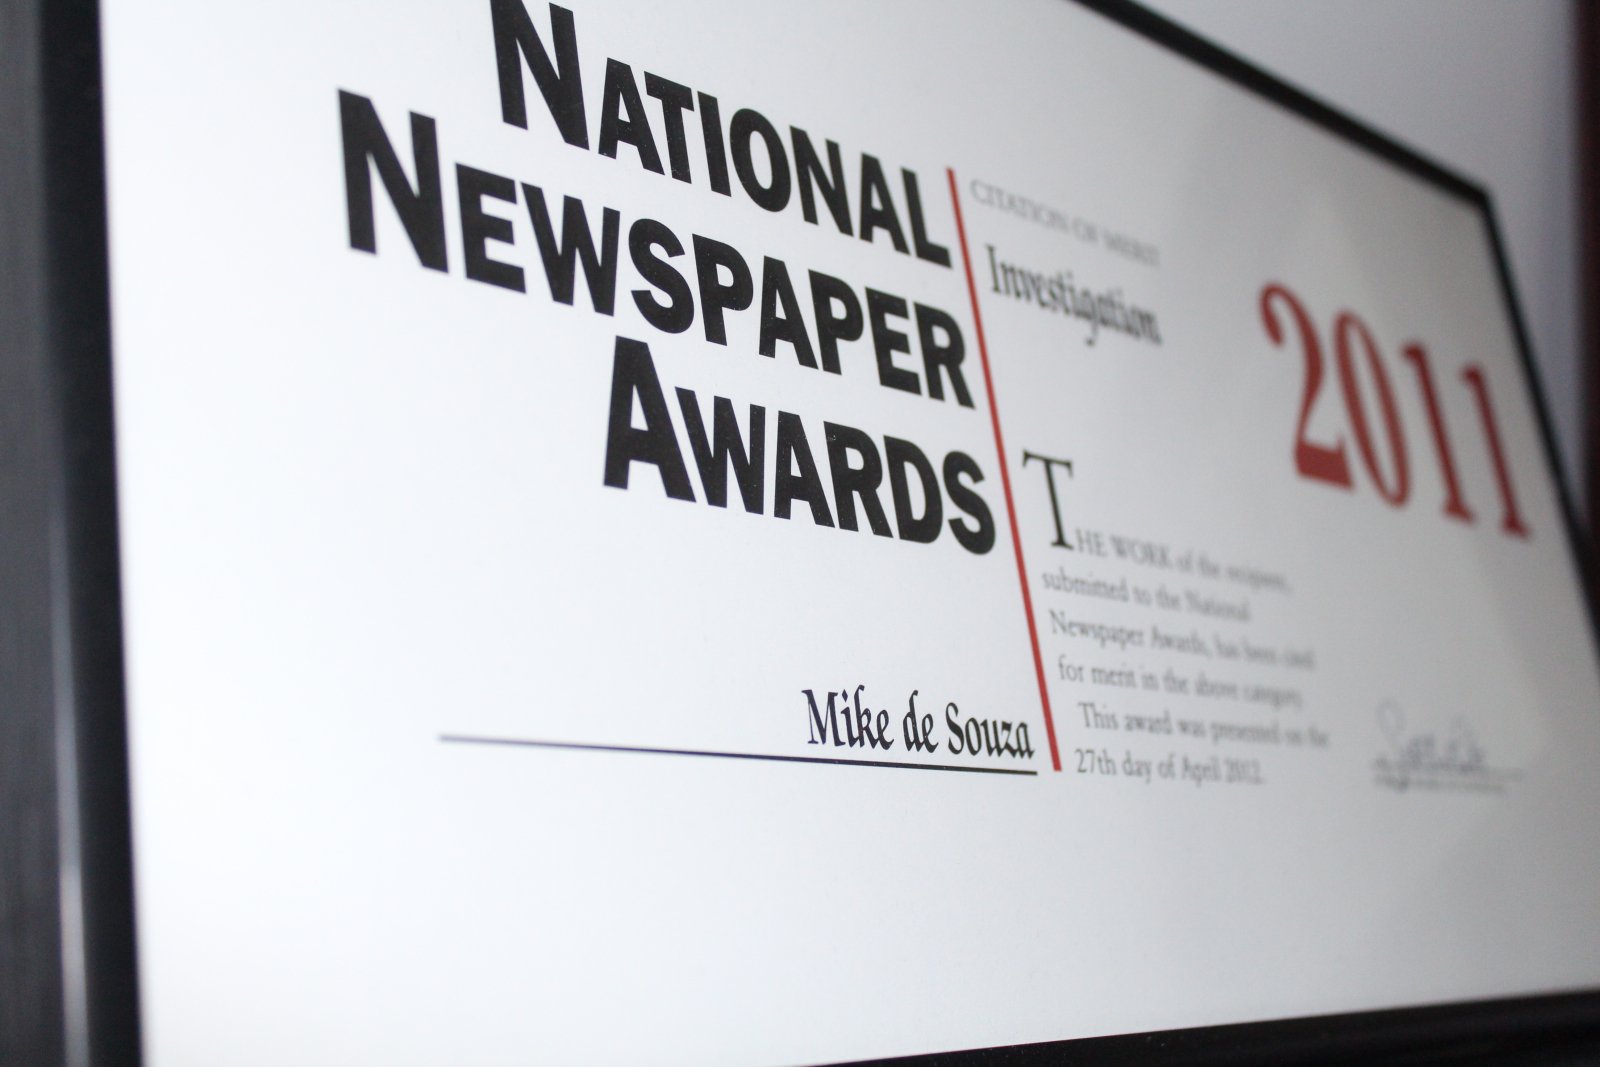 Mike De Souza, National Newspaper Awards, 2011, Friends of Science